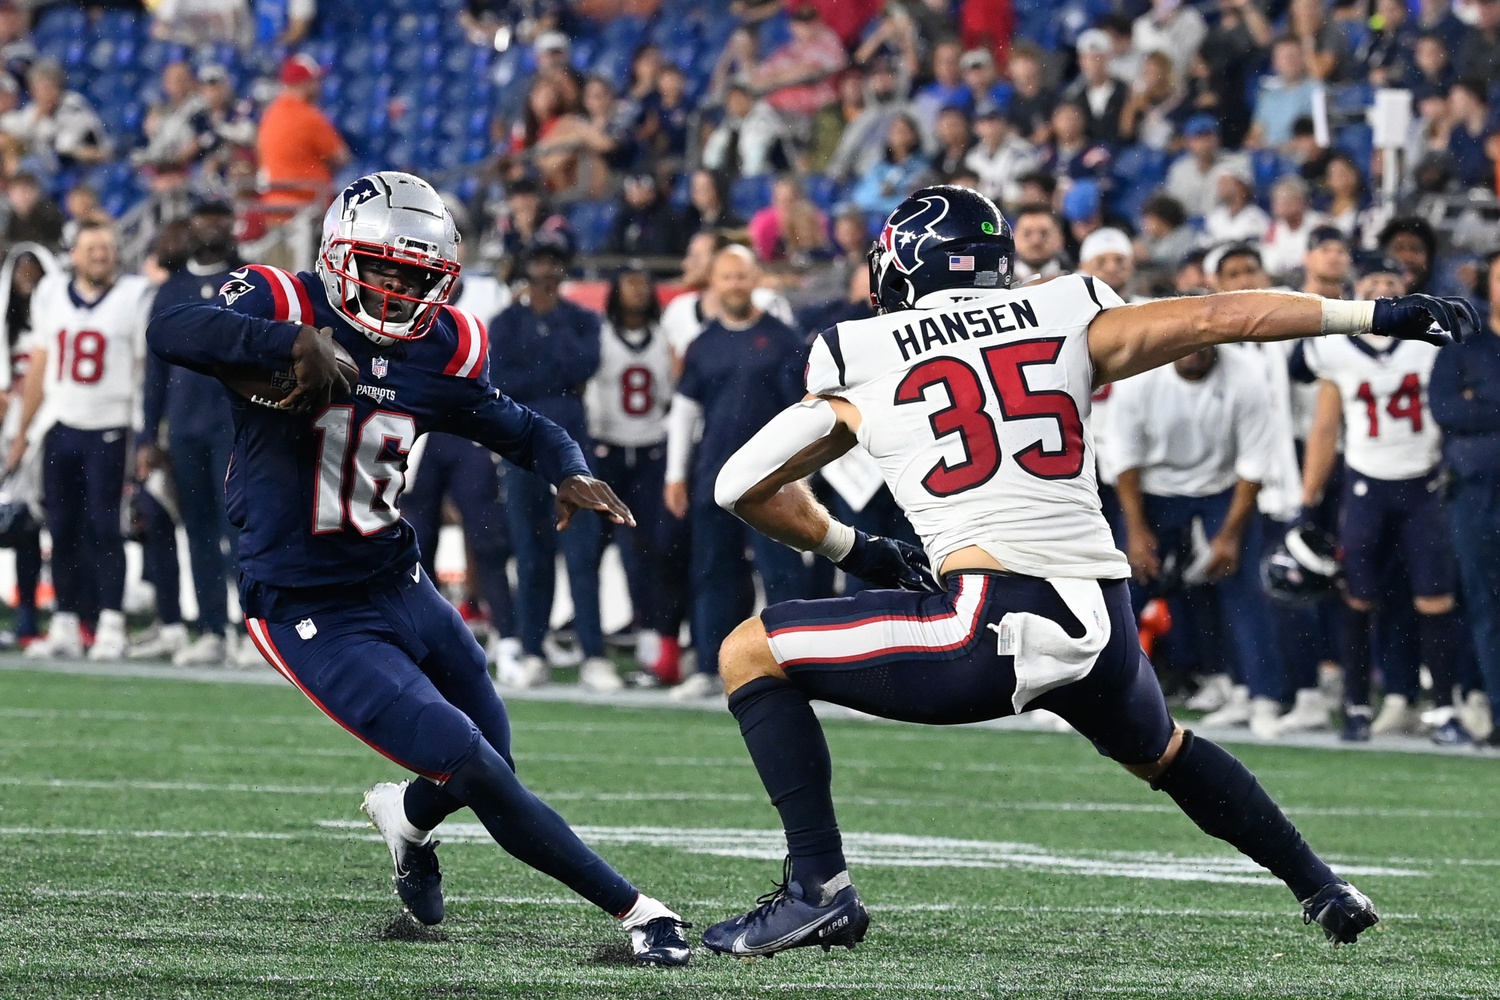 New England Patriots quarterback Malik Cunningham (16) runs the ball as Houston Texans linebacker Jake Hansen (35) closes in during the second half at Gillette Stadium.